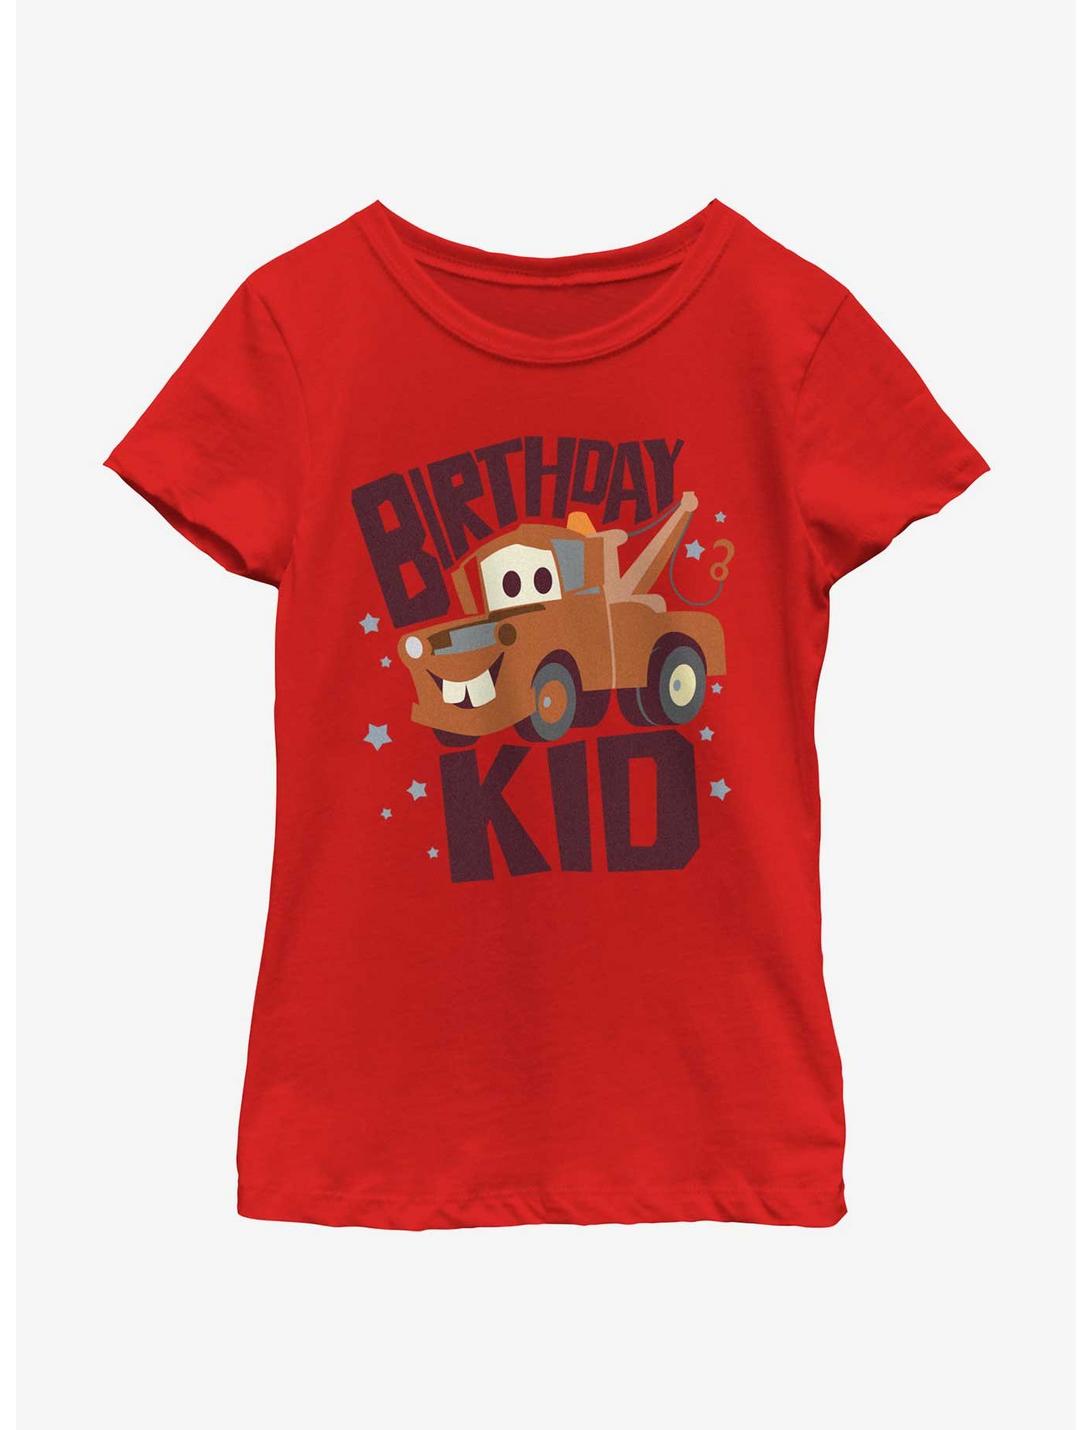 Disney Pixar Cars Mater Birthday Kid Youth Girls T-Shirt, RED, hi-res